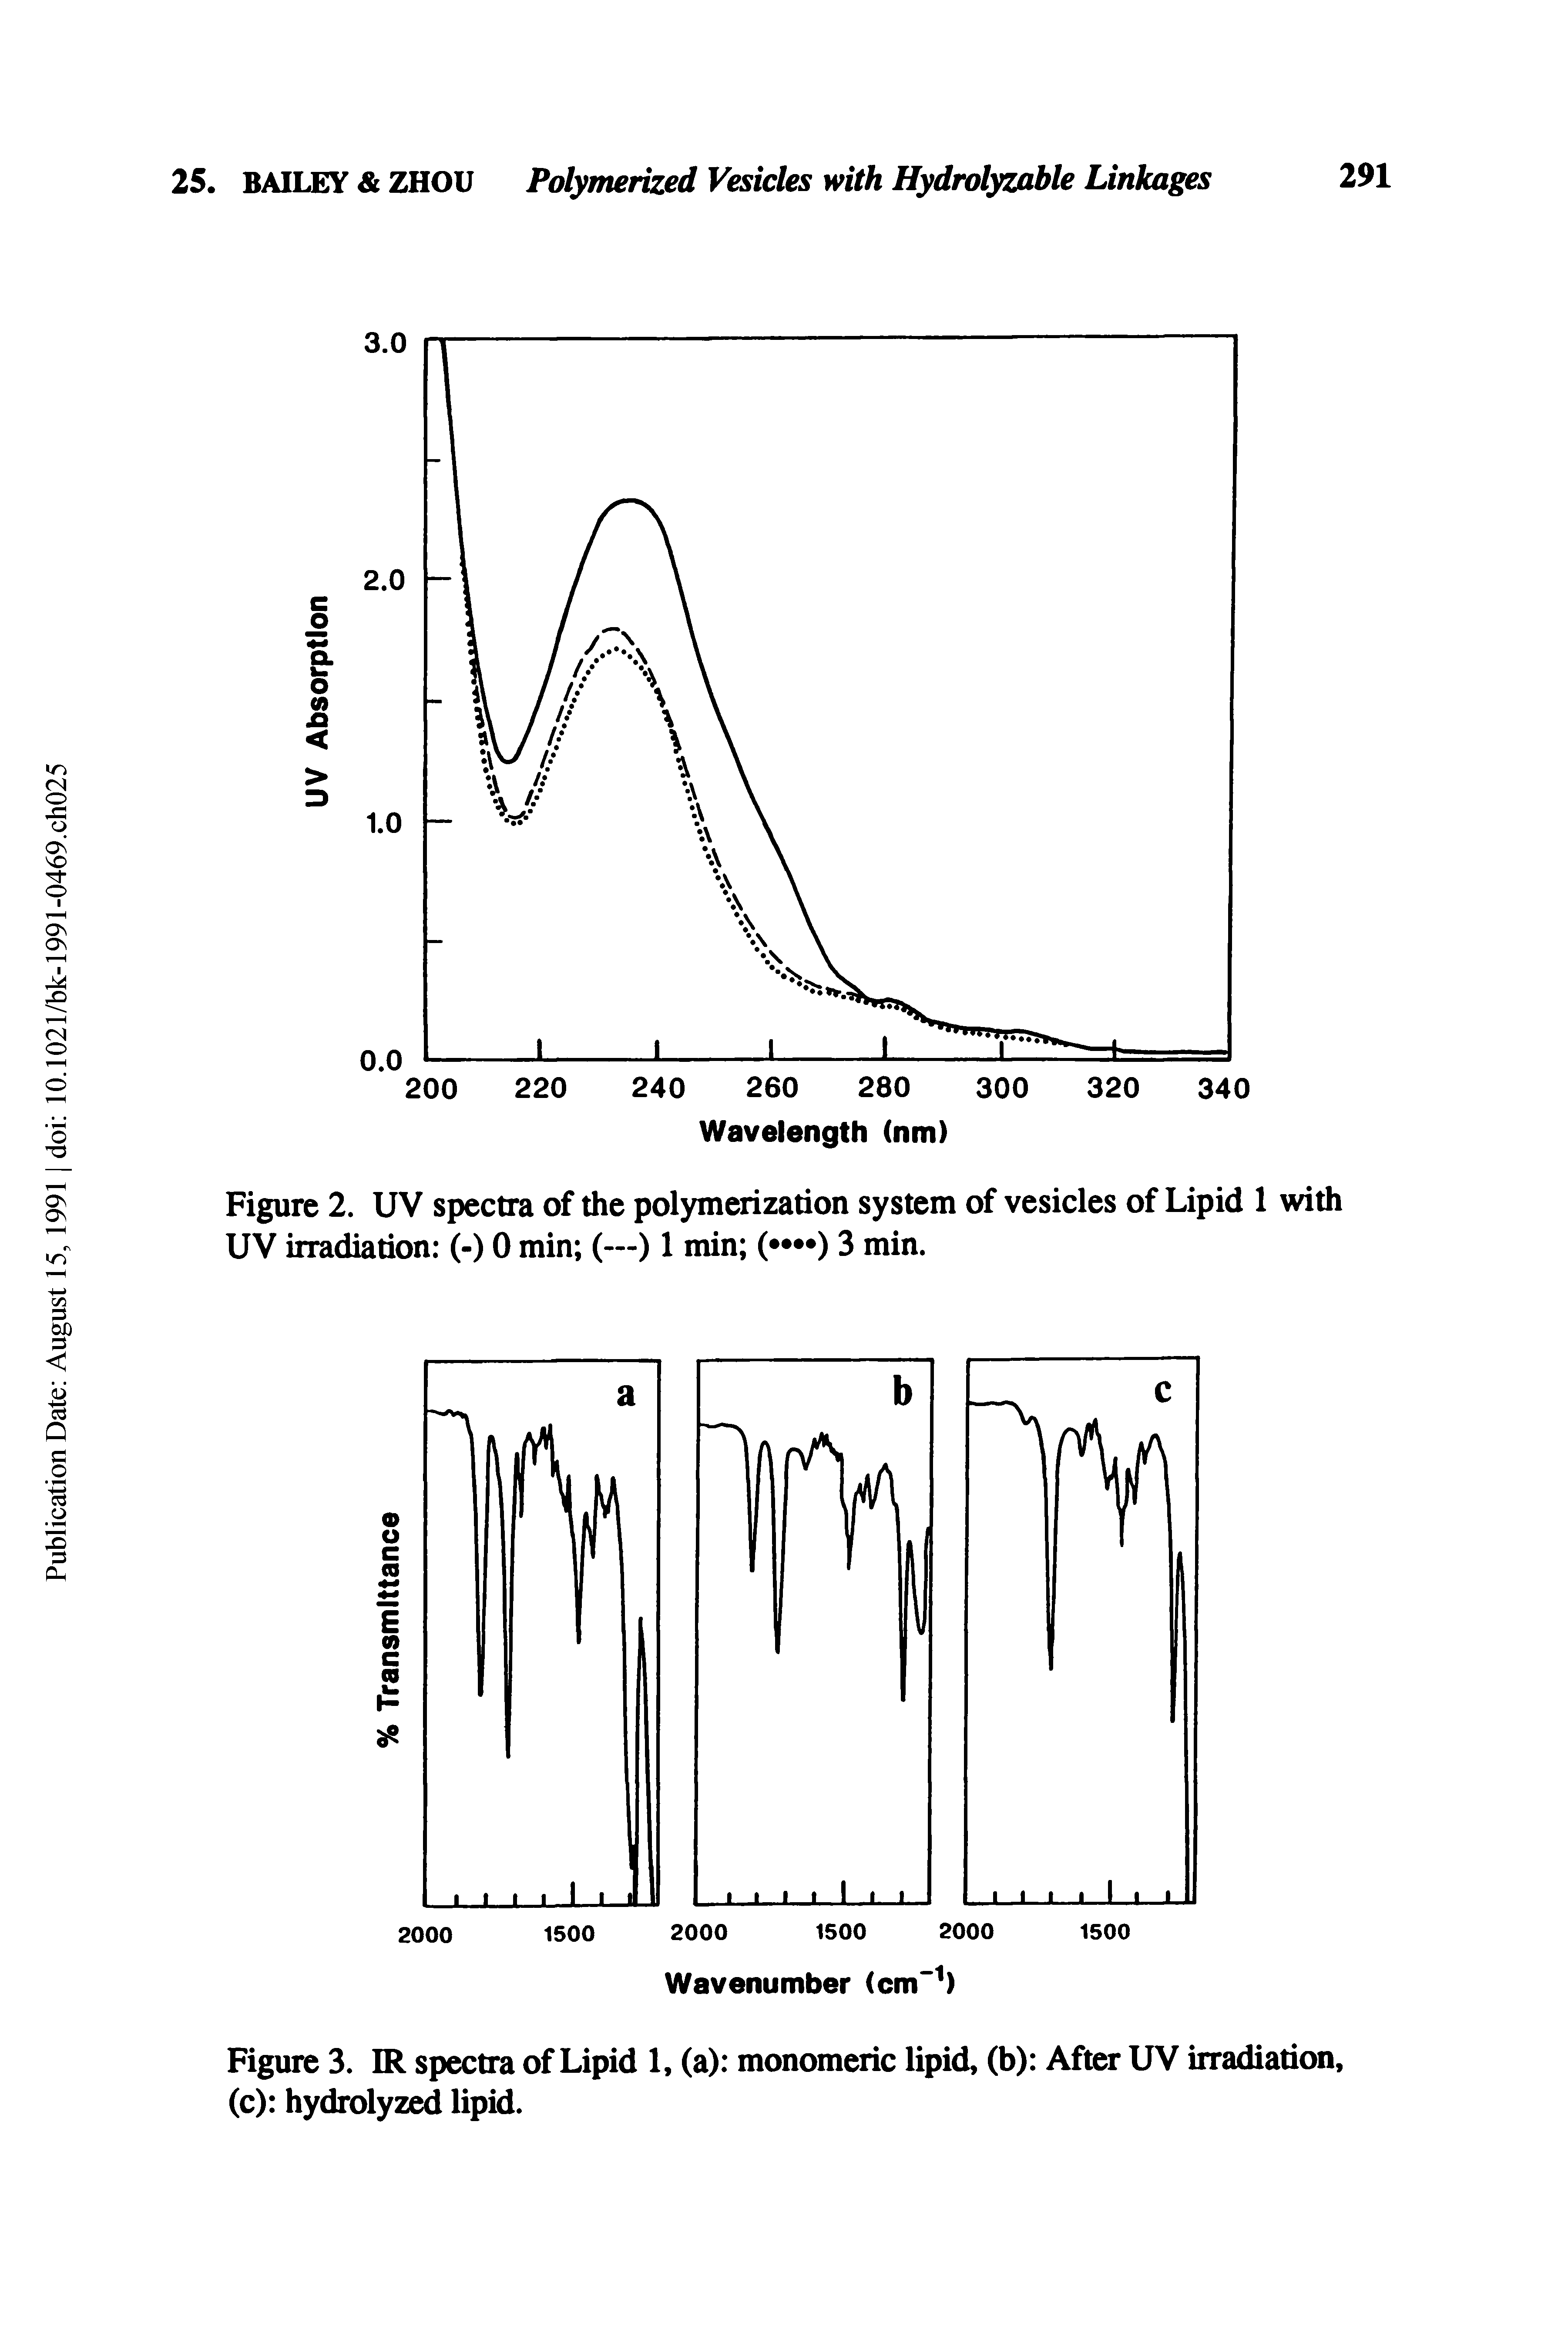 Figure 3. IR spectra of Lipid 1, (a) monomeric lipid, (b) After UV irradiation, (c) hydrolyzed lipid.